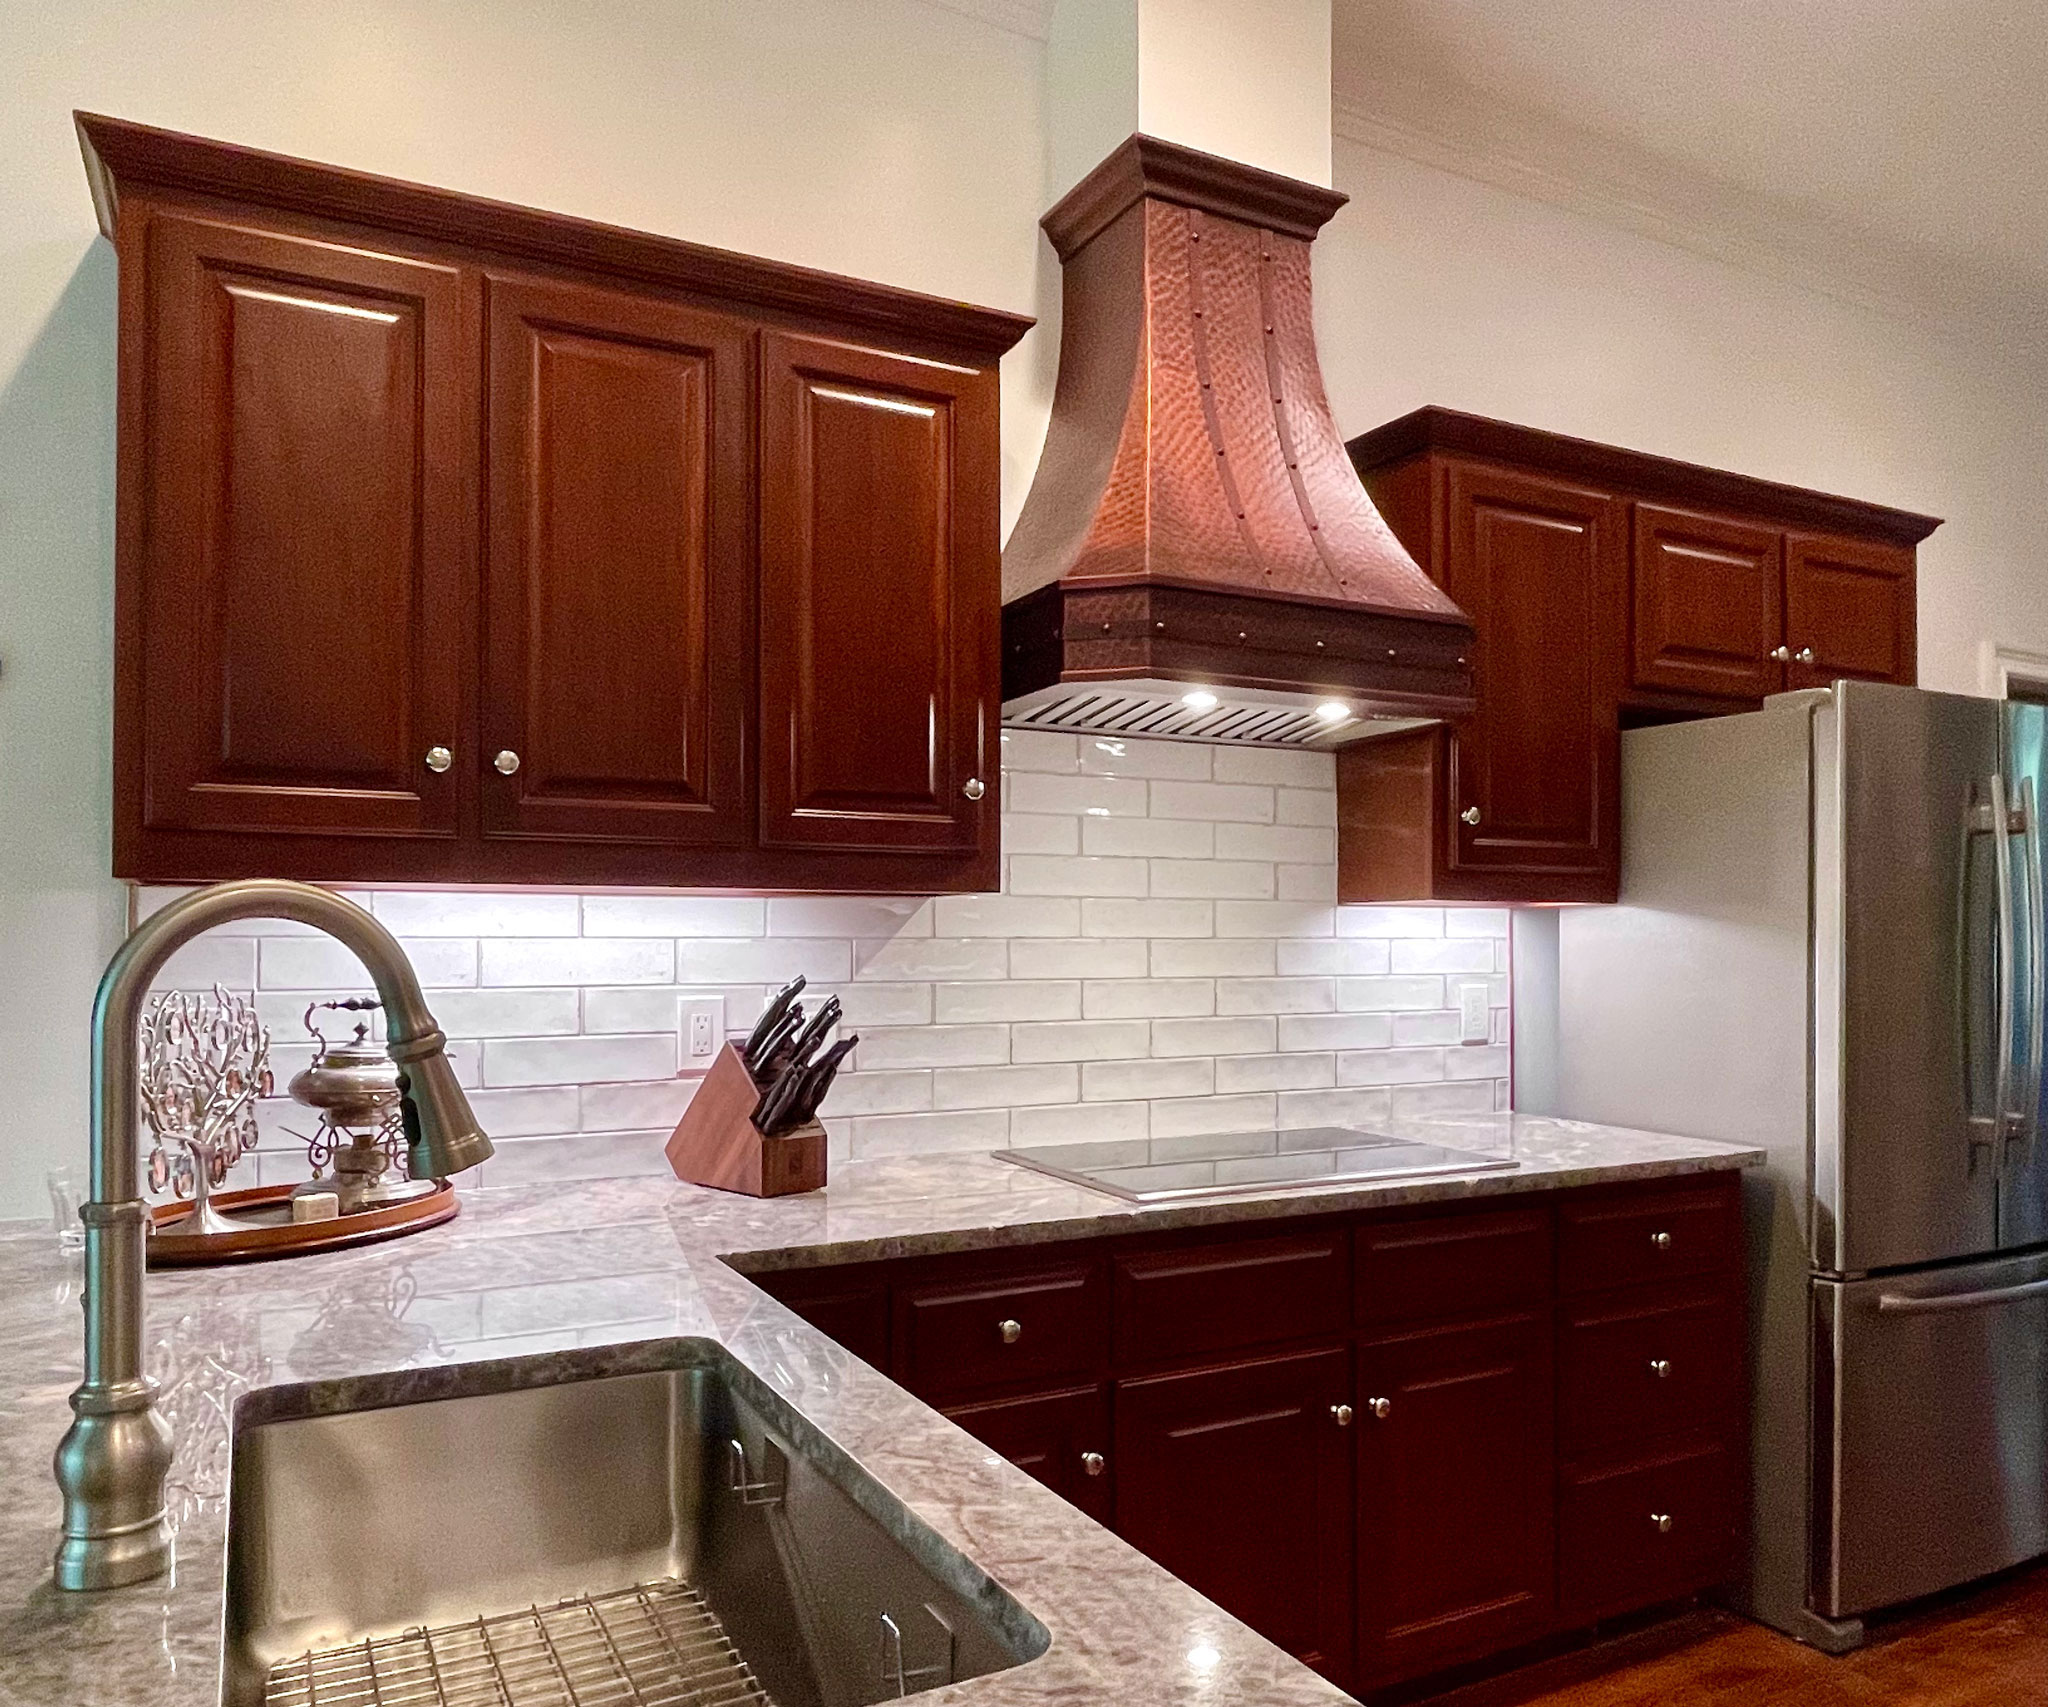 Embrace cottage kitchen design with rich brown kitchen cabinets,marble kitchen countertops with range hood charming brick backsplash